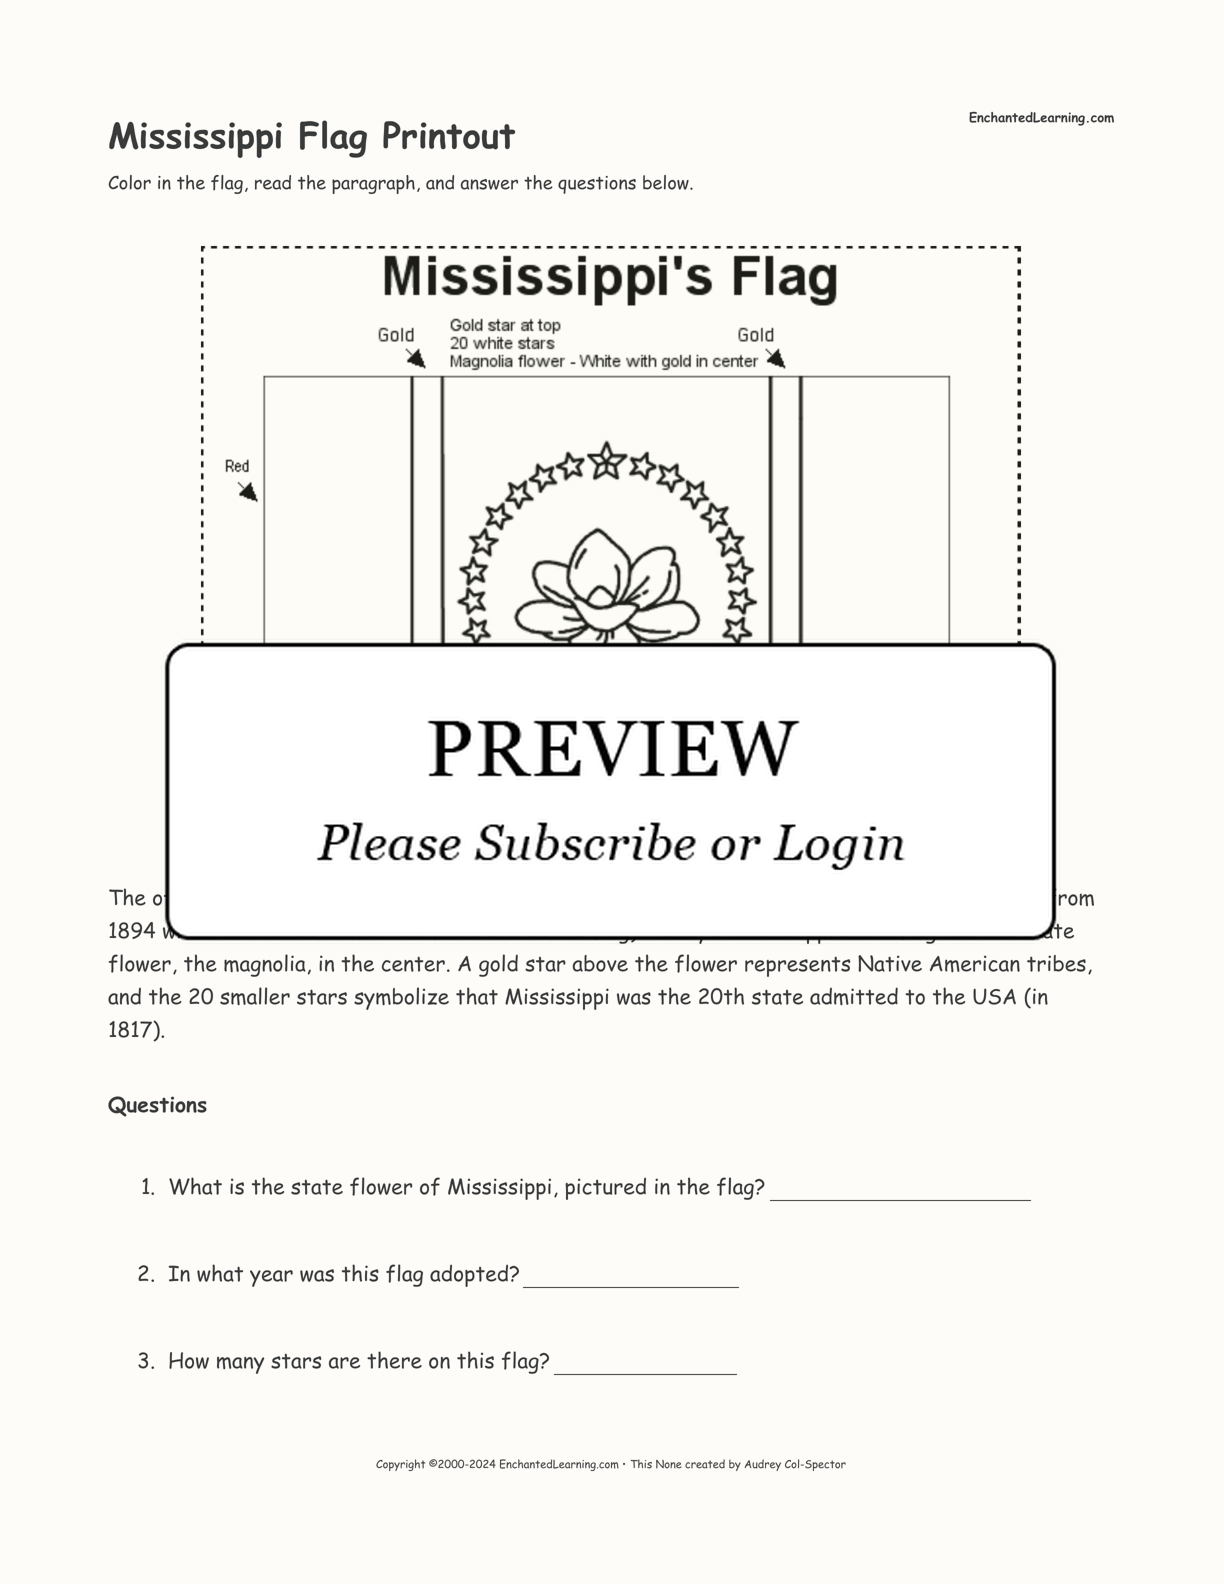 Mississippi Flag Printout interactive worksheet page 1